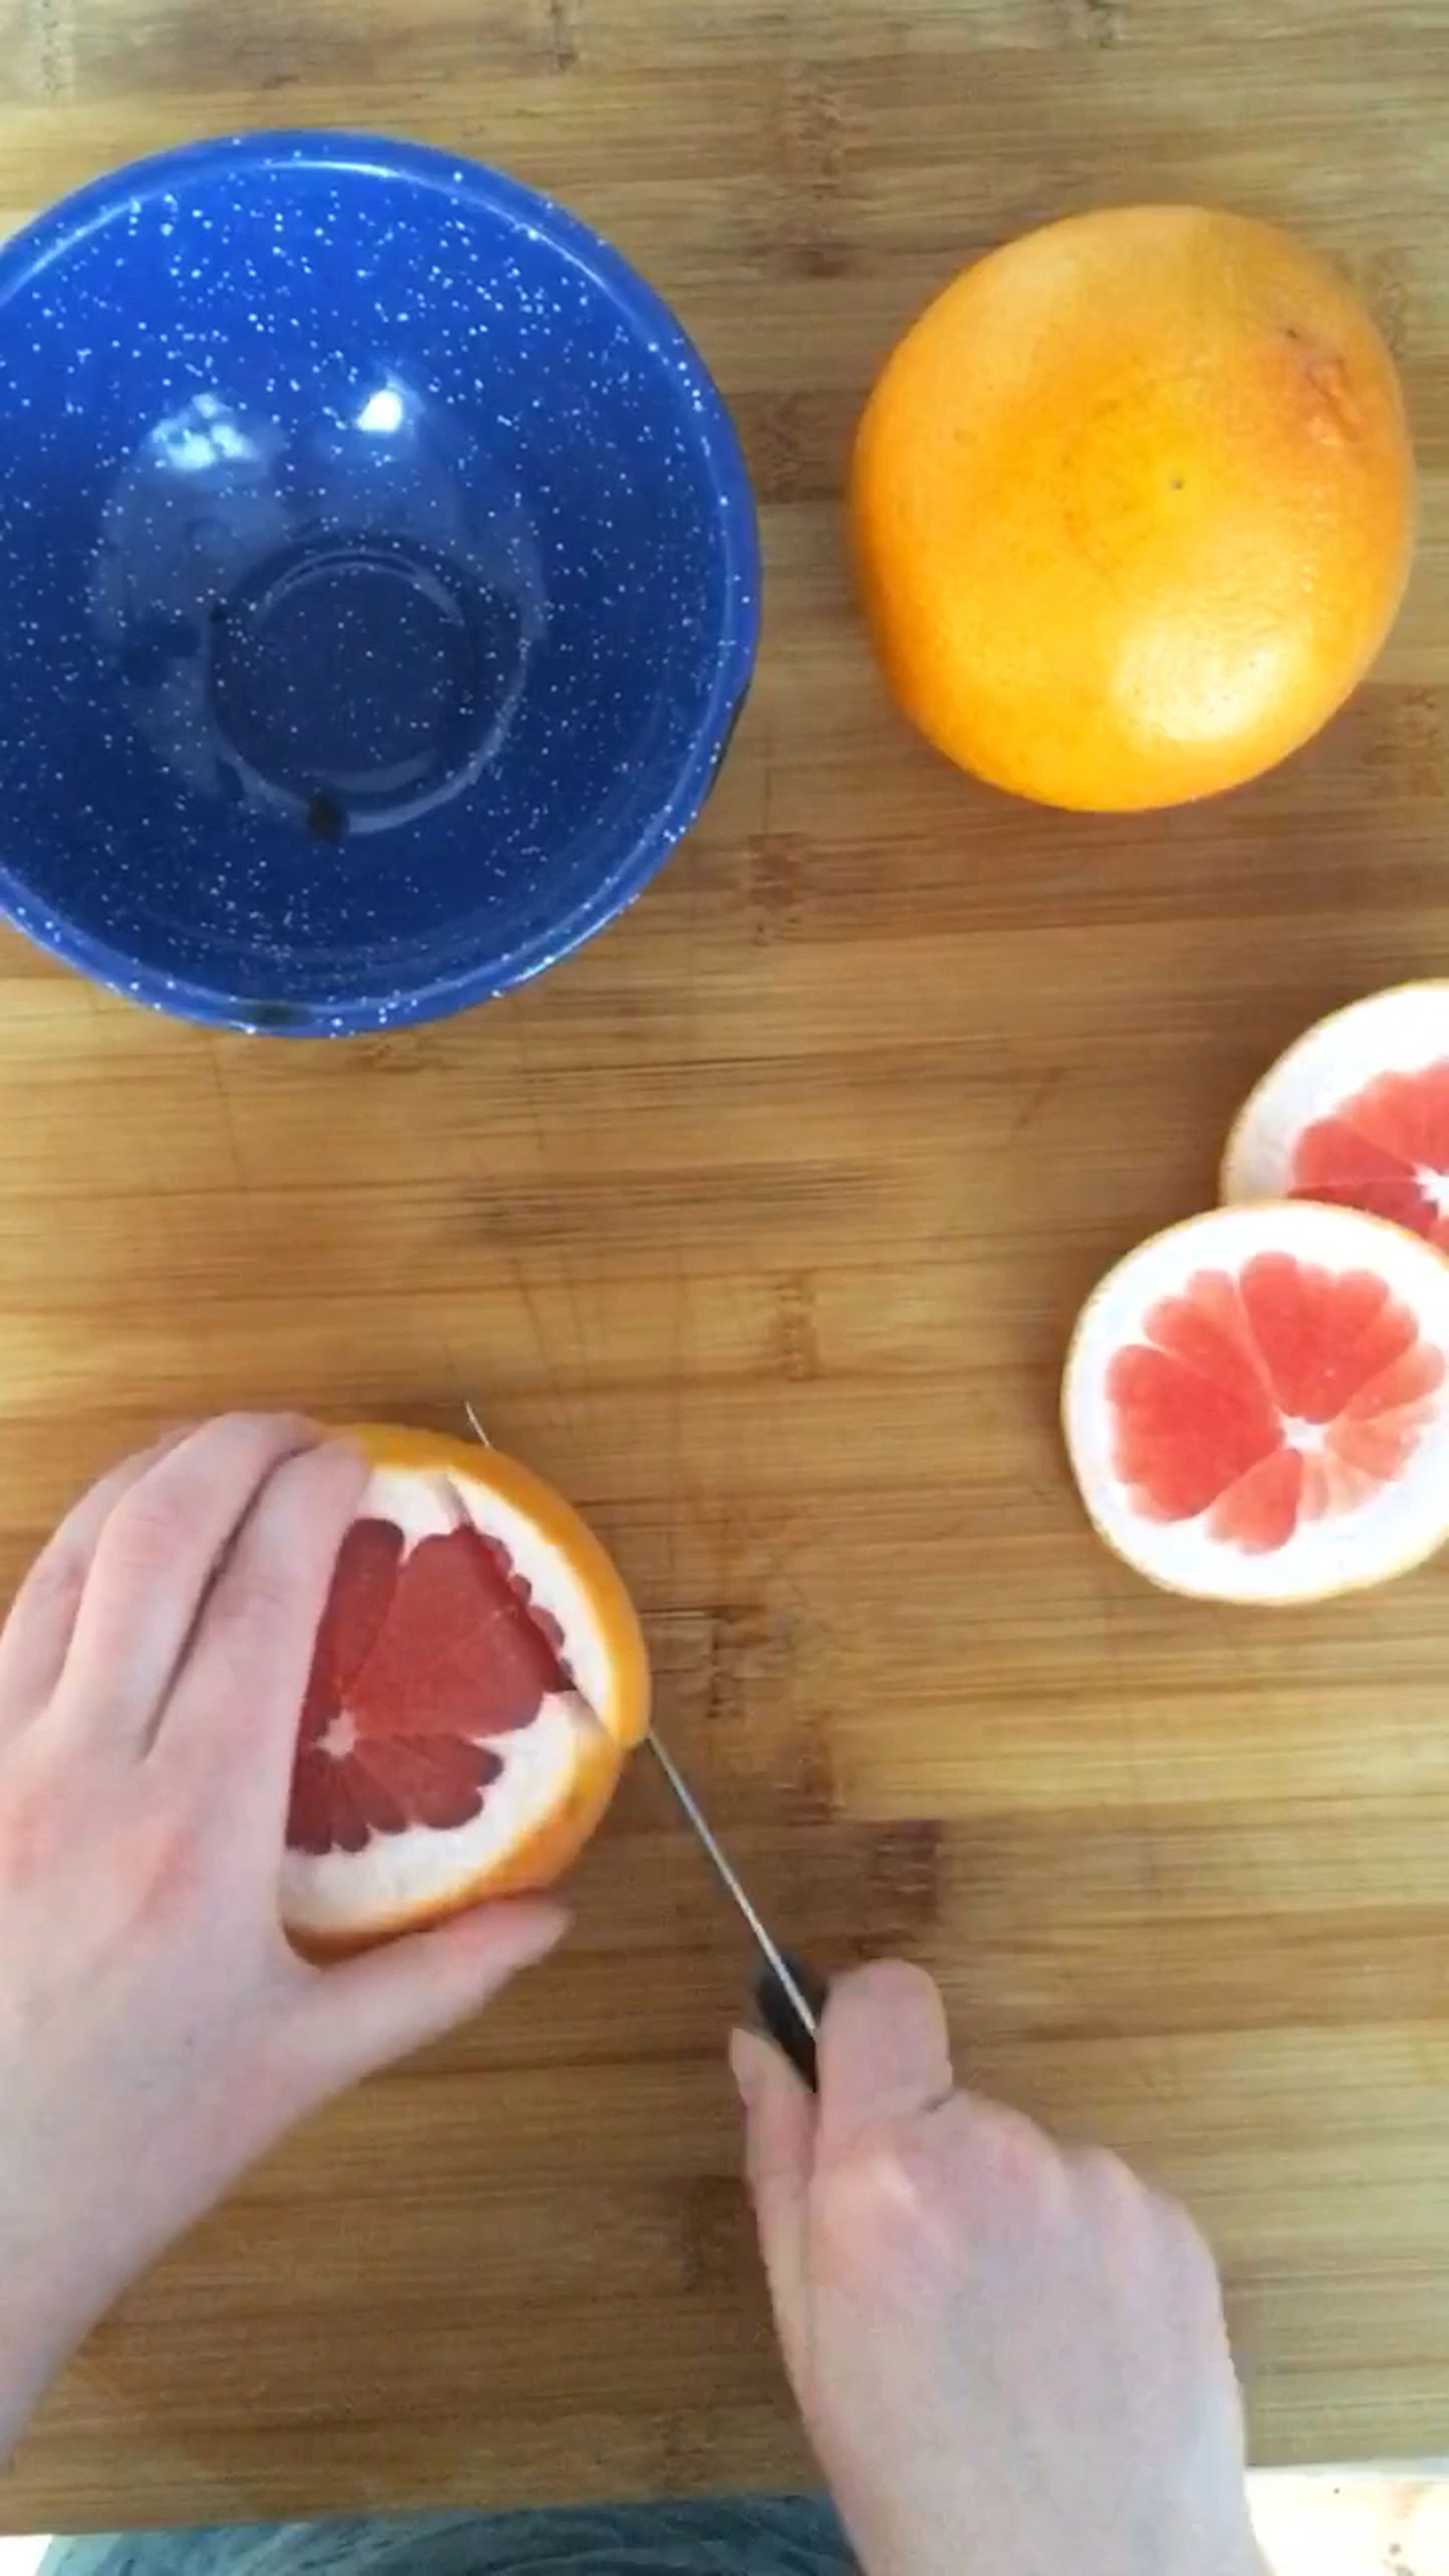 Peel the grapefruit.